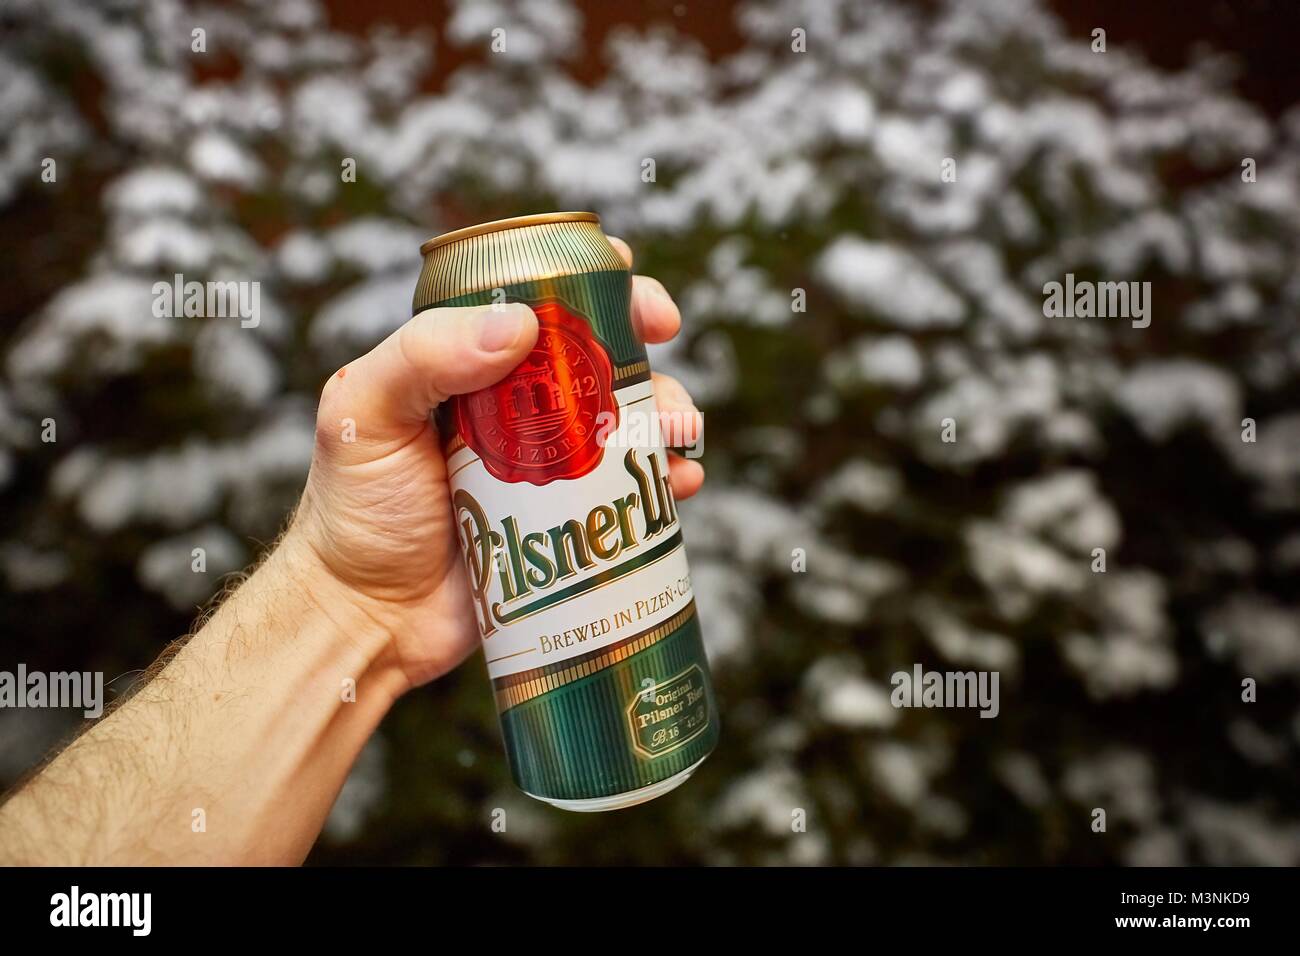 BUDAPEST, Ungarn - 29. JANUAR 2018: Holding a kann der Pilsner Urquell,  beliebte tschechische Bier in Pilsen gebraut Stockfotografie - Alamy